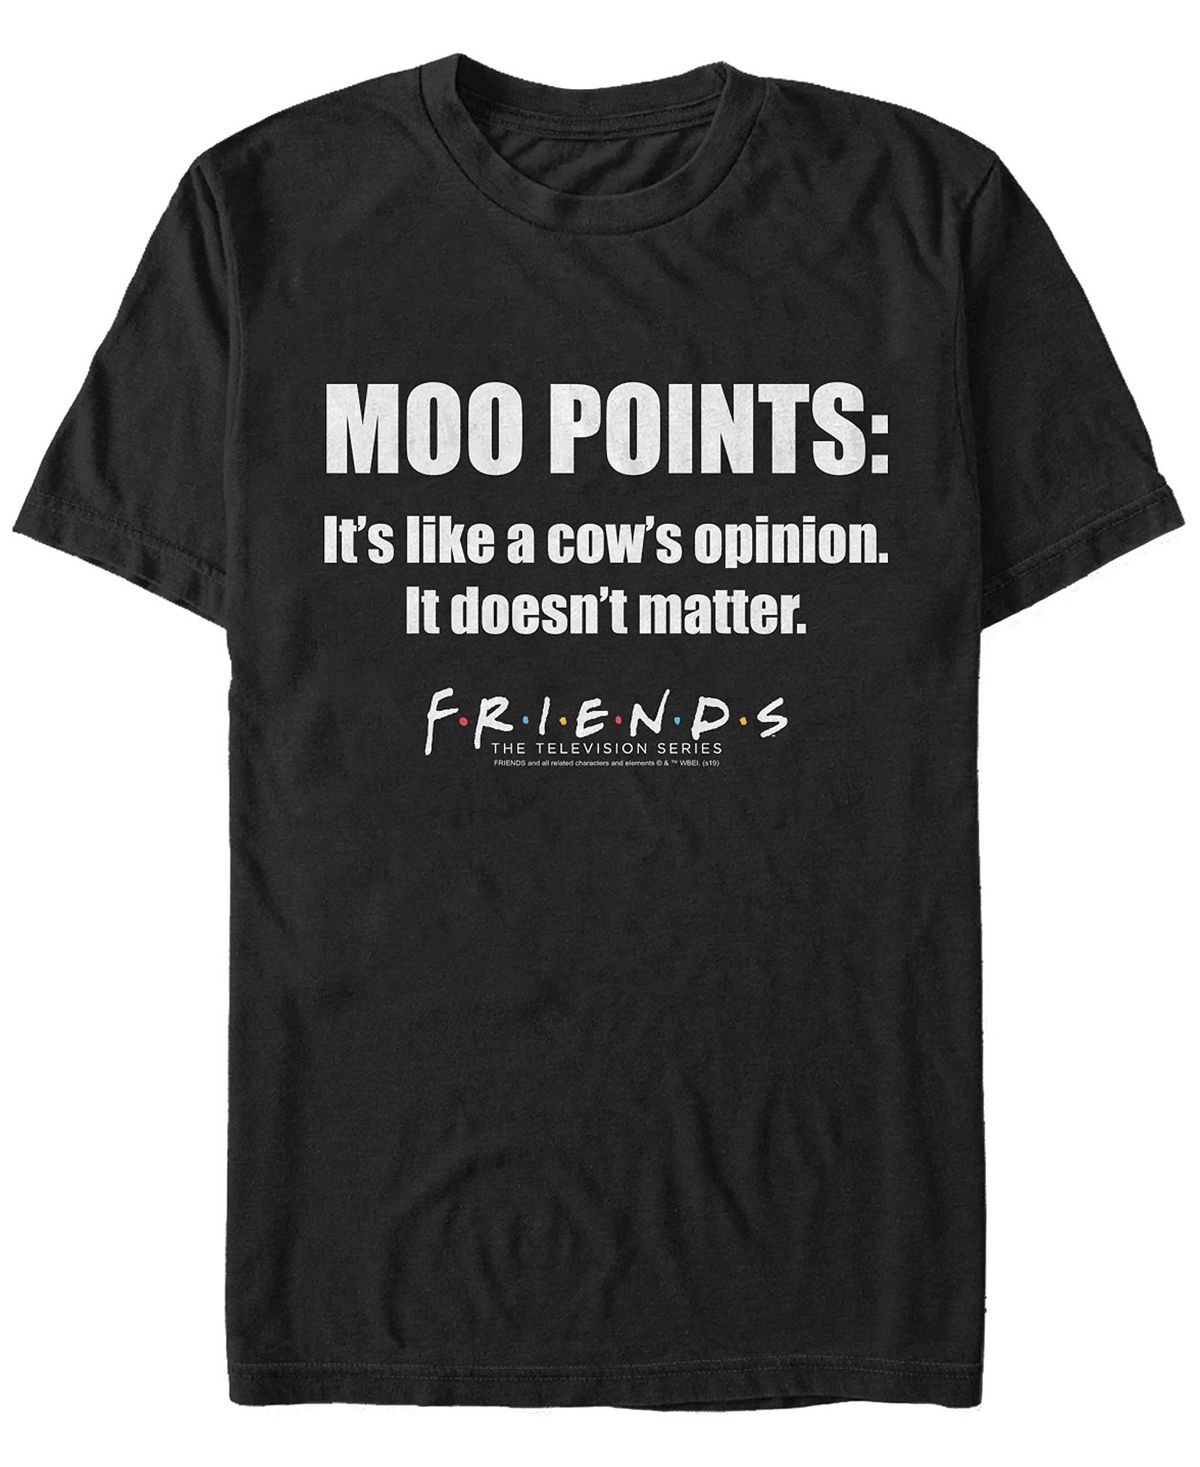 Мужская футболка с короткими рукавами и принтом Moo Points Friends Fifth Sun цена и фото